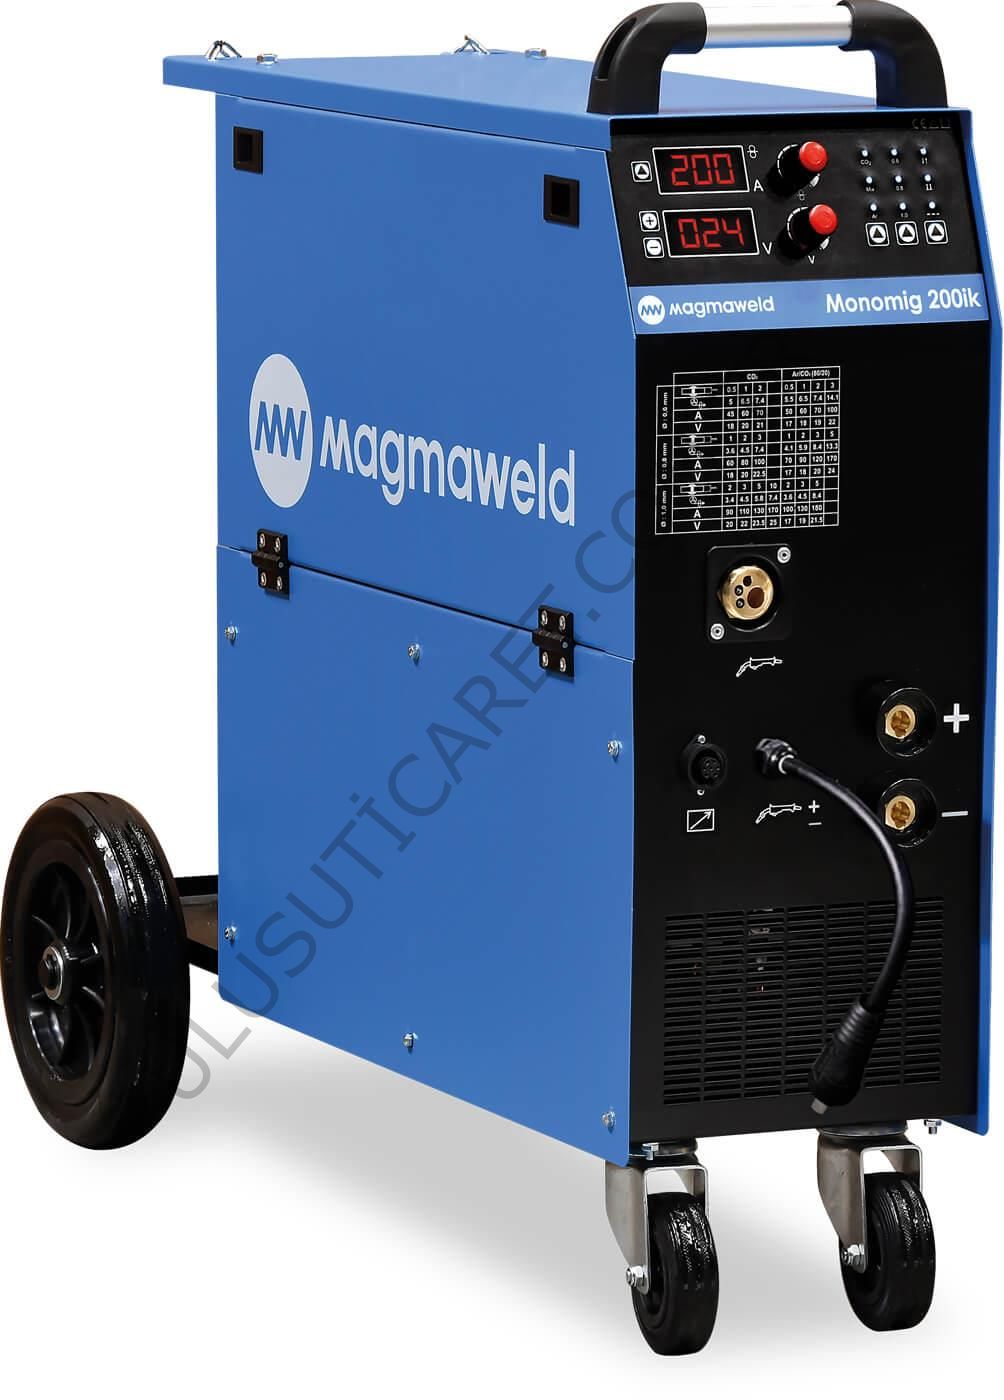 Magmaweld Monomıg 200 İk Kaynak Makinesi